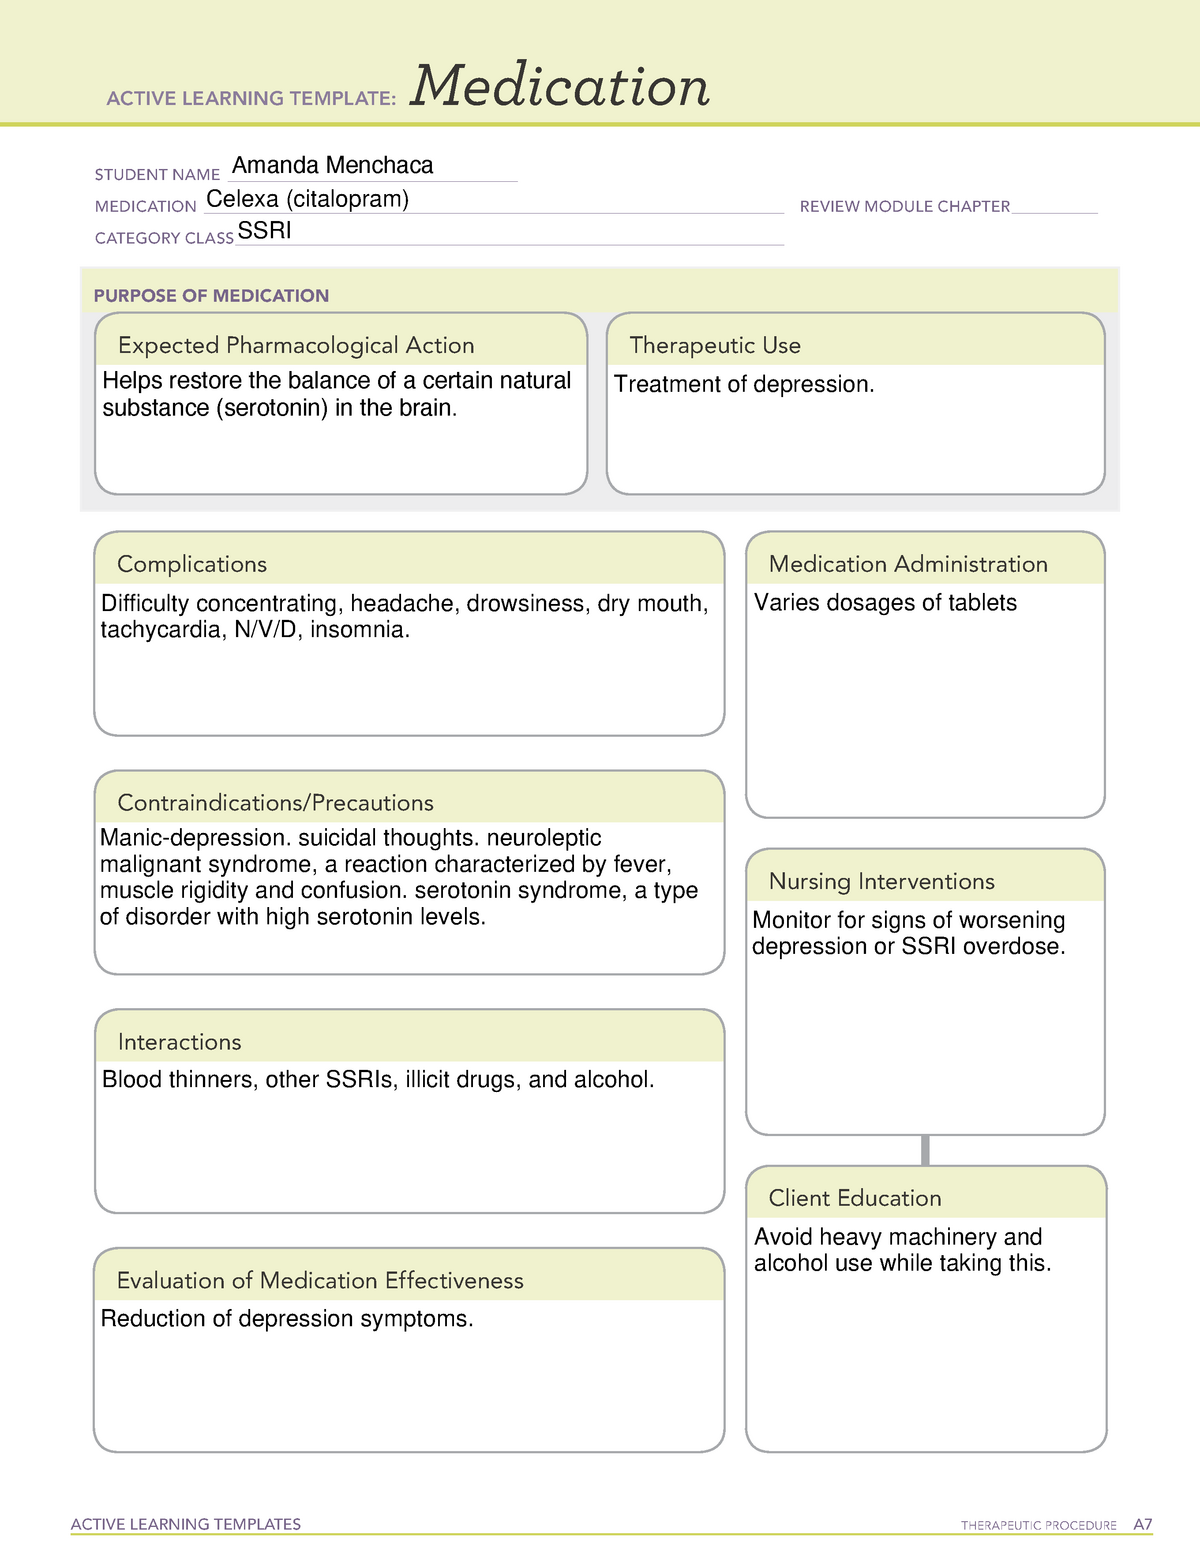 Celexa-MED - ATI medication card template - NUR22 - pharmacology Inside Medication Card Template